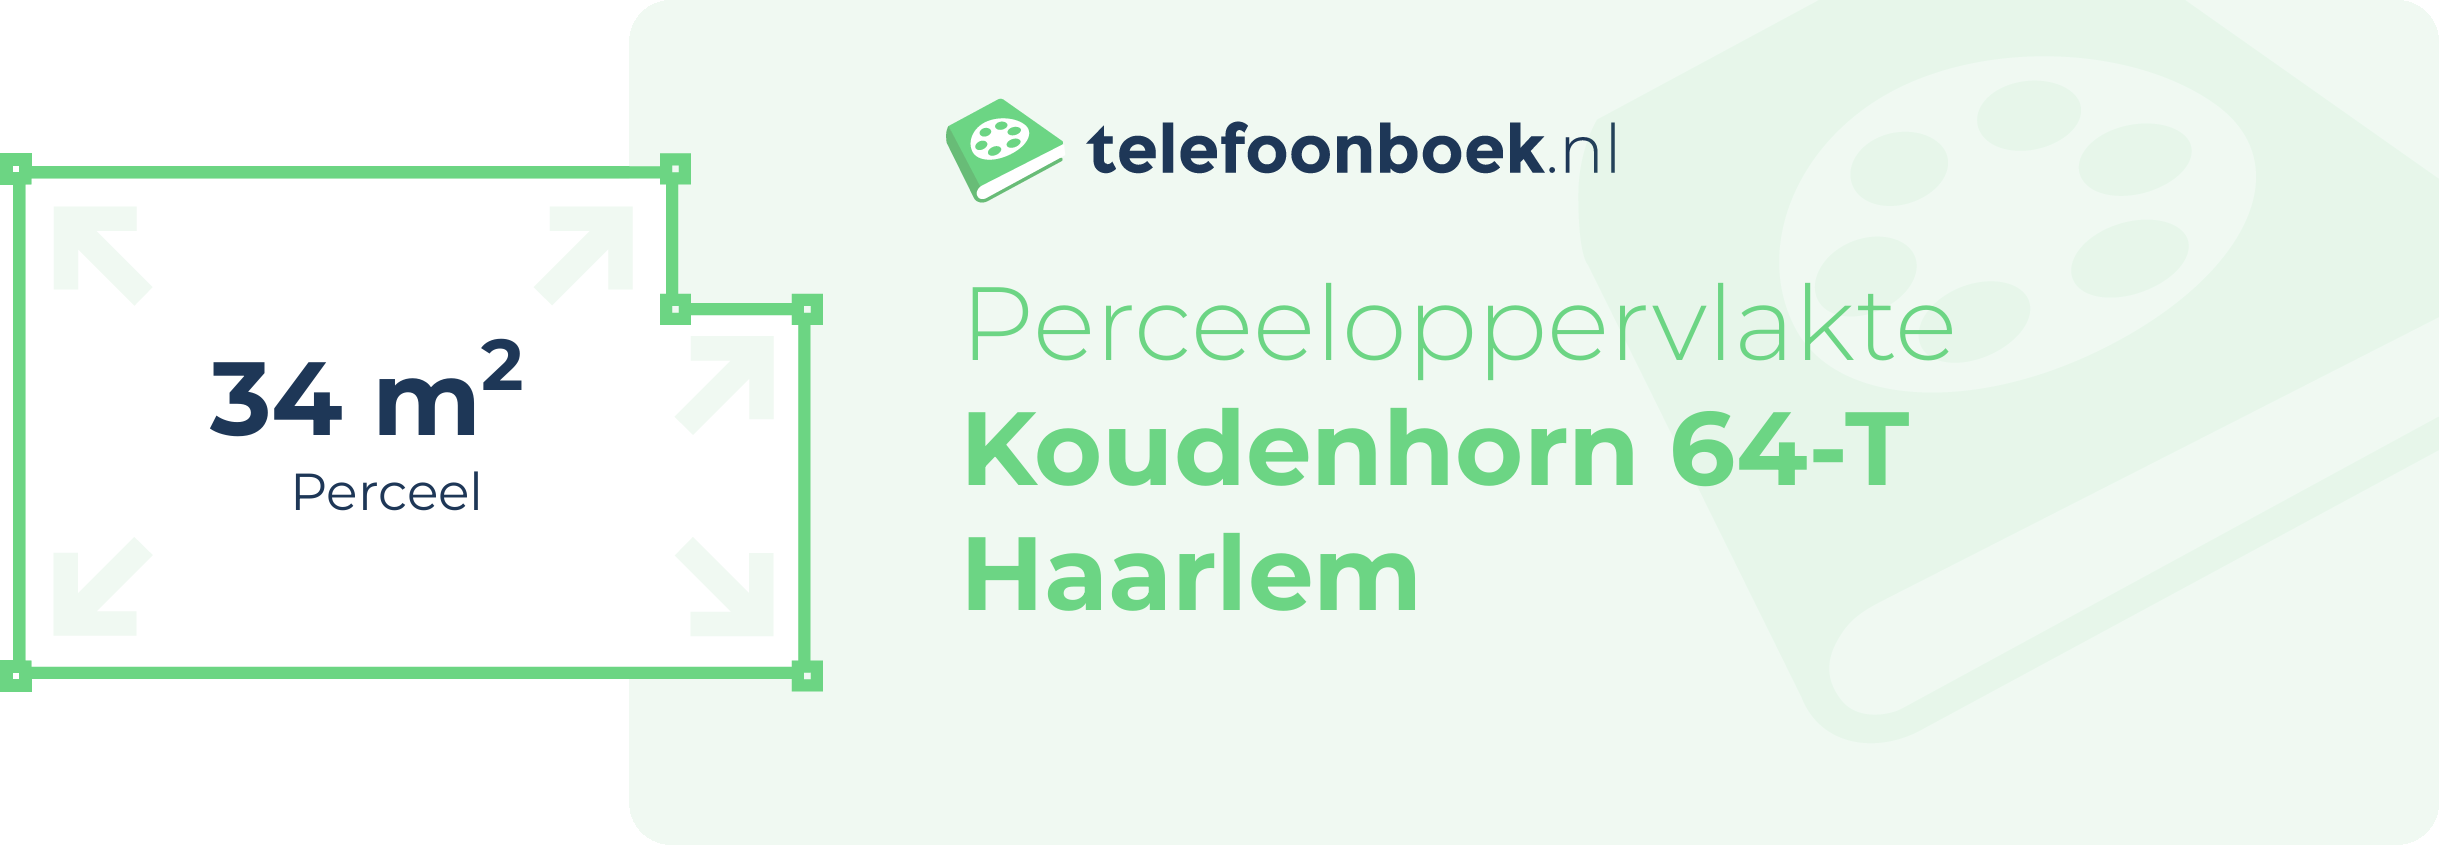 Perceeloppervlakte Koudenhorn 64-T Haarlem